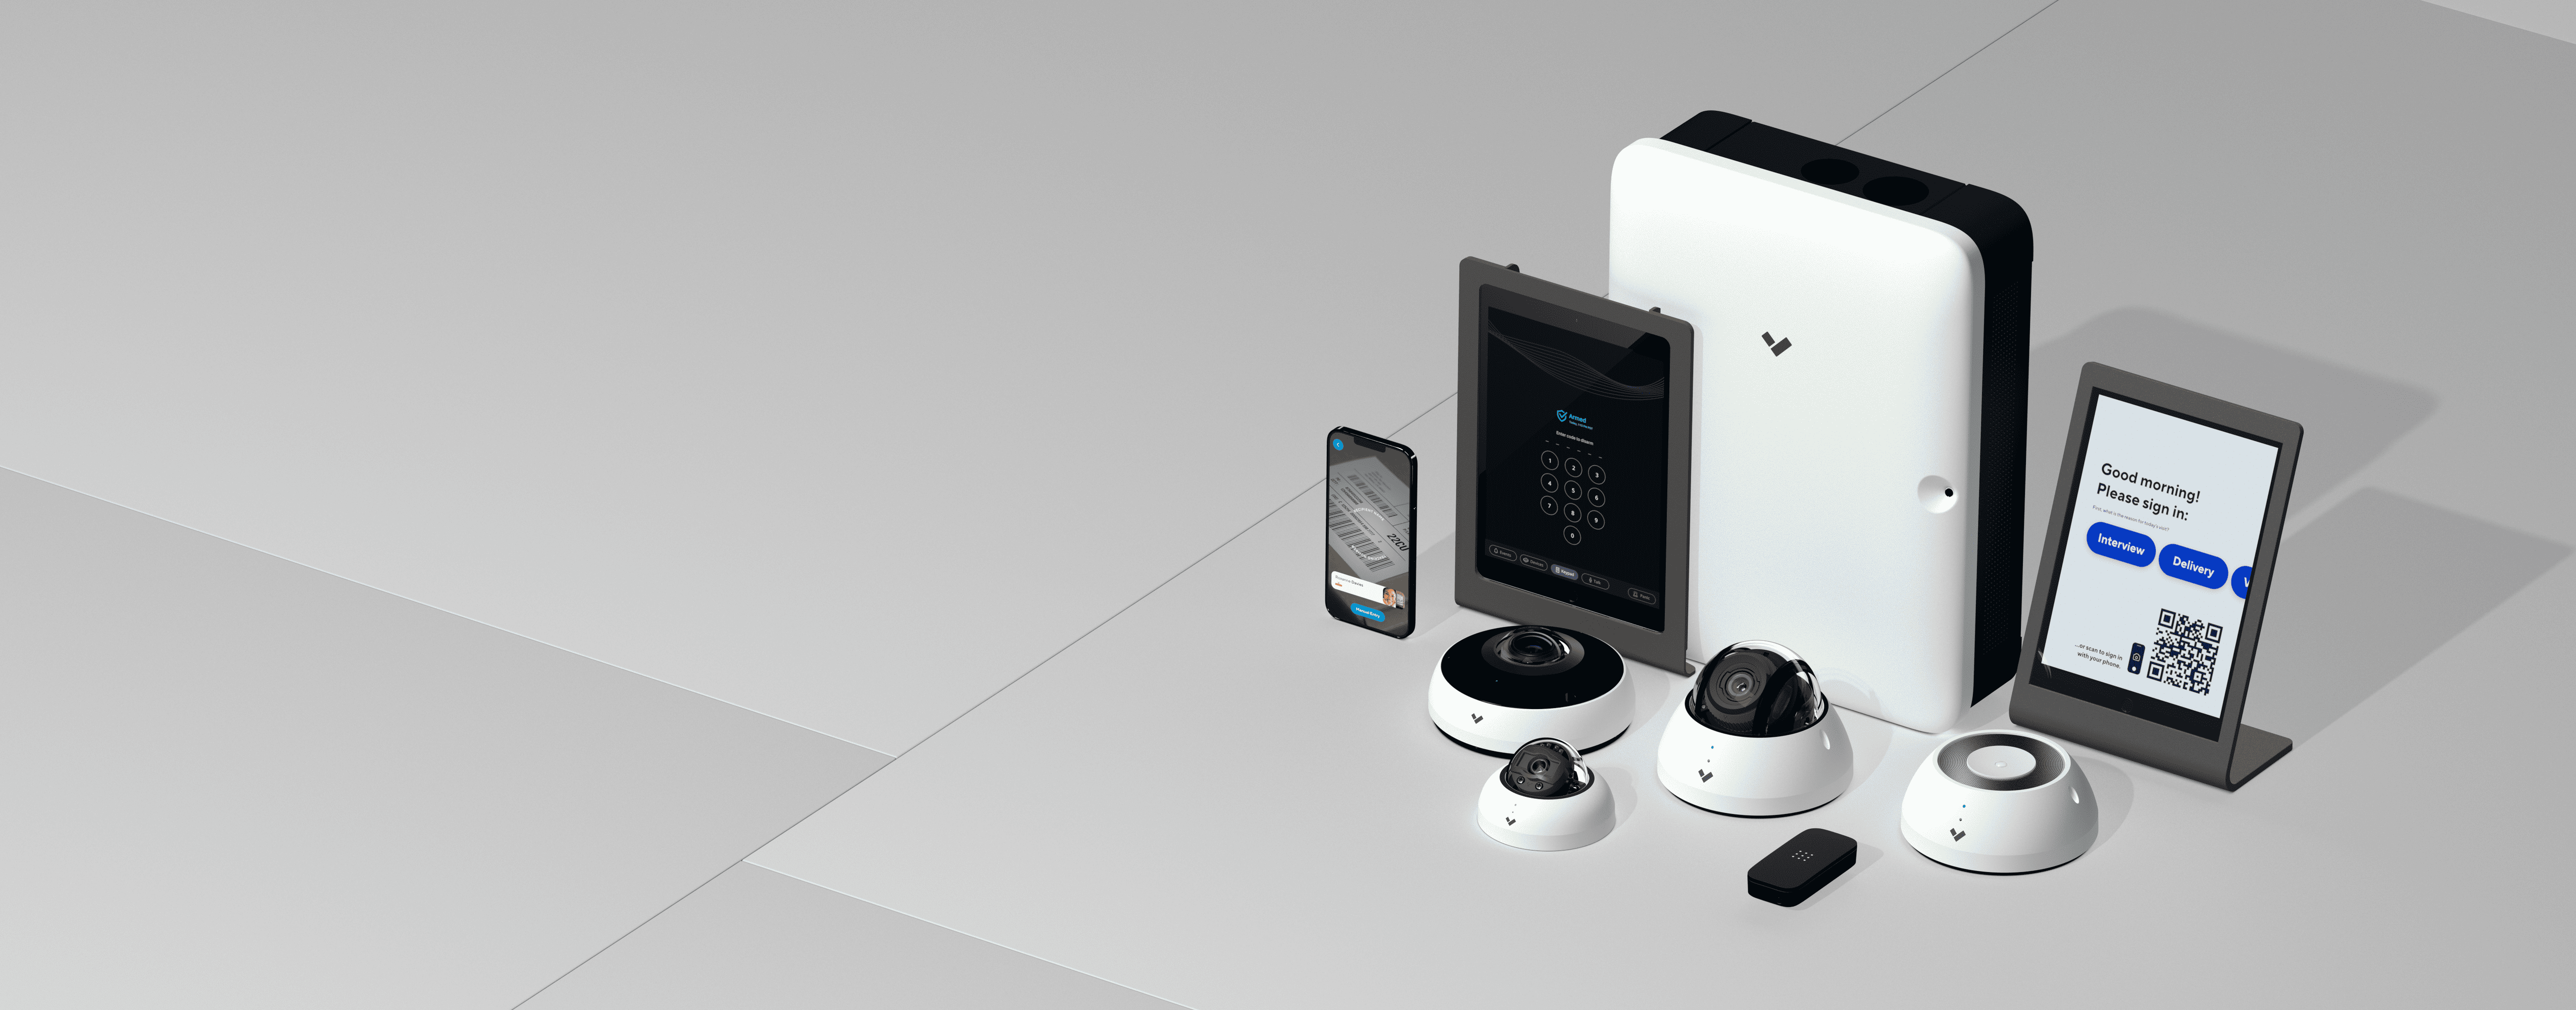 Verkada security device family including the CF81-E